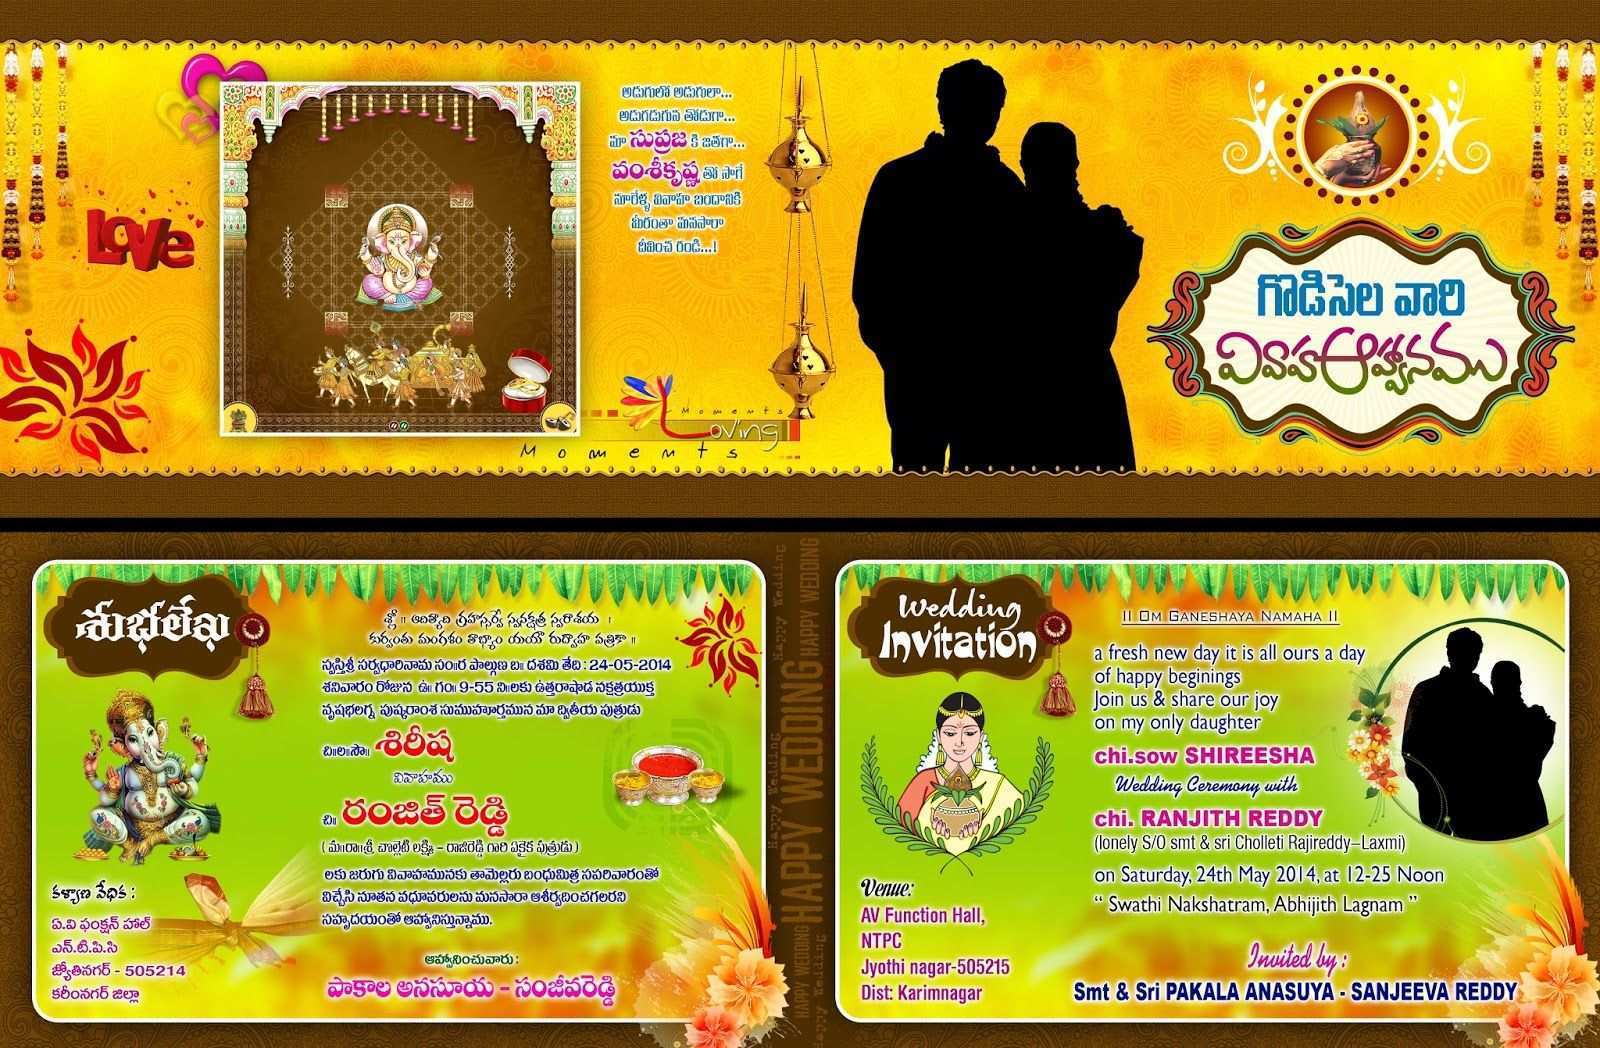 95 Adding Telugu Wedding Card Templates Free Download Photo with Telugu Wedding Card Templates Free Download